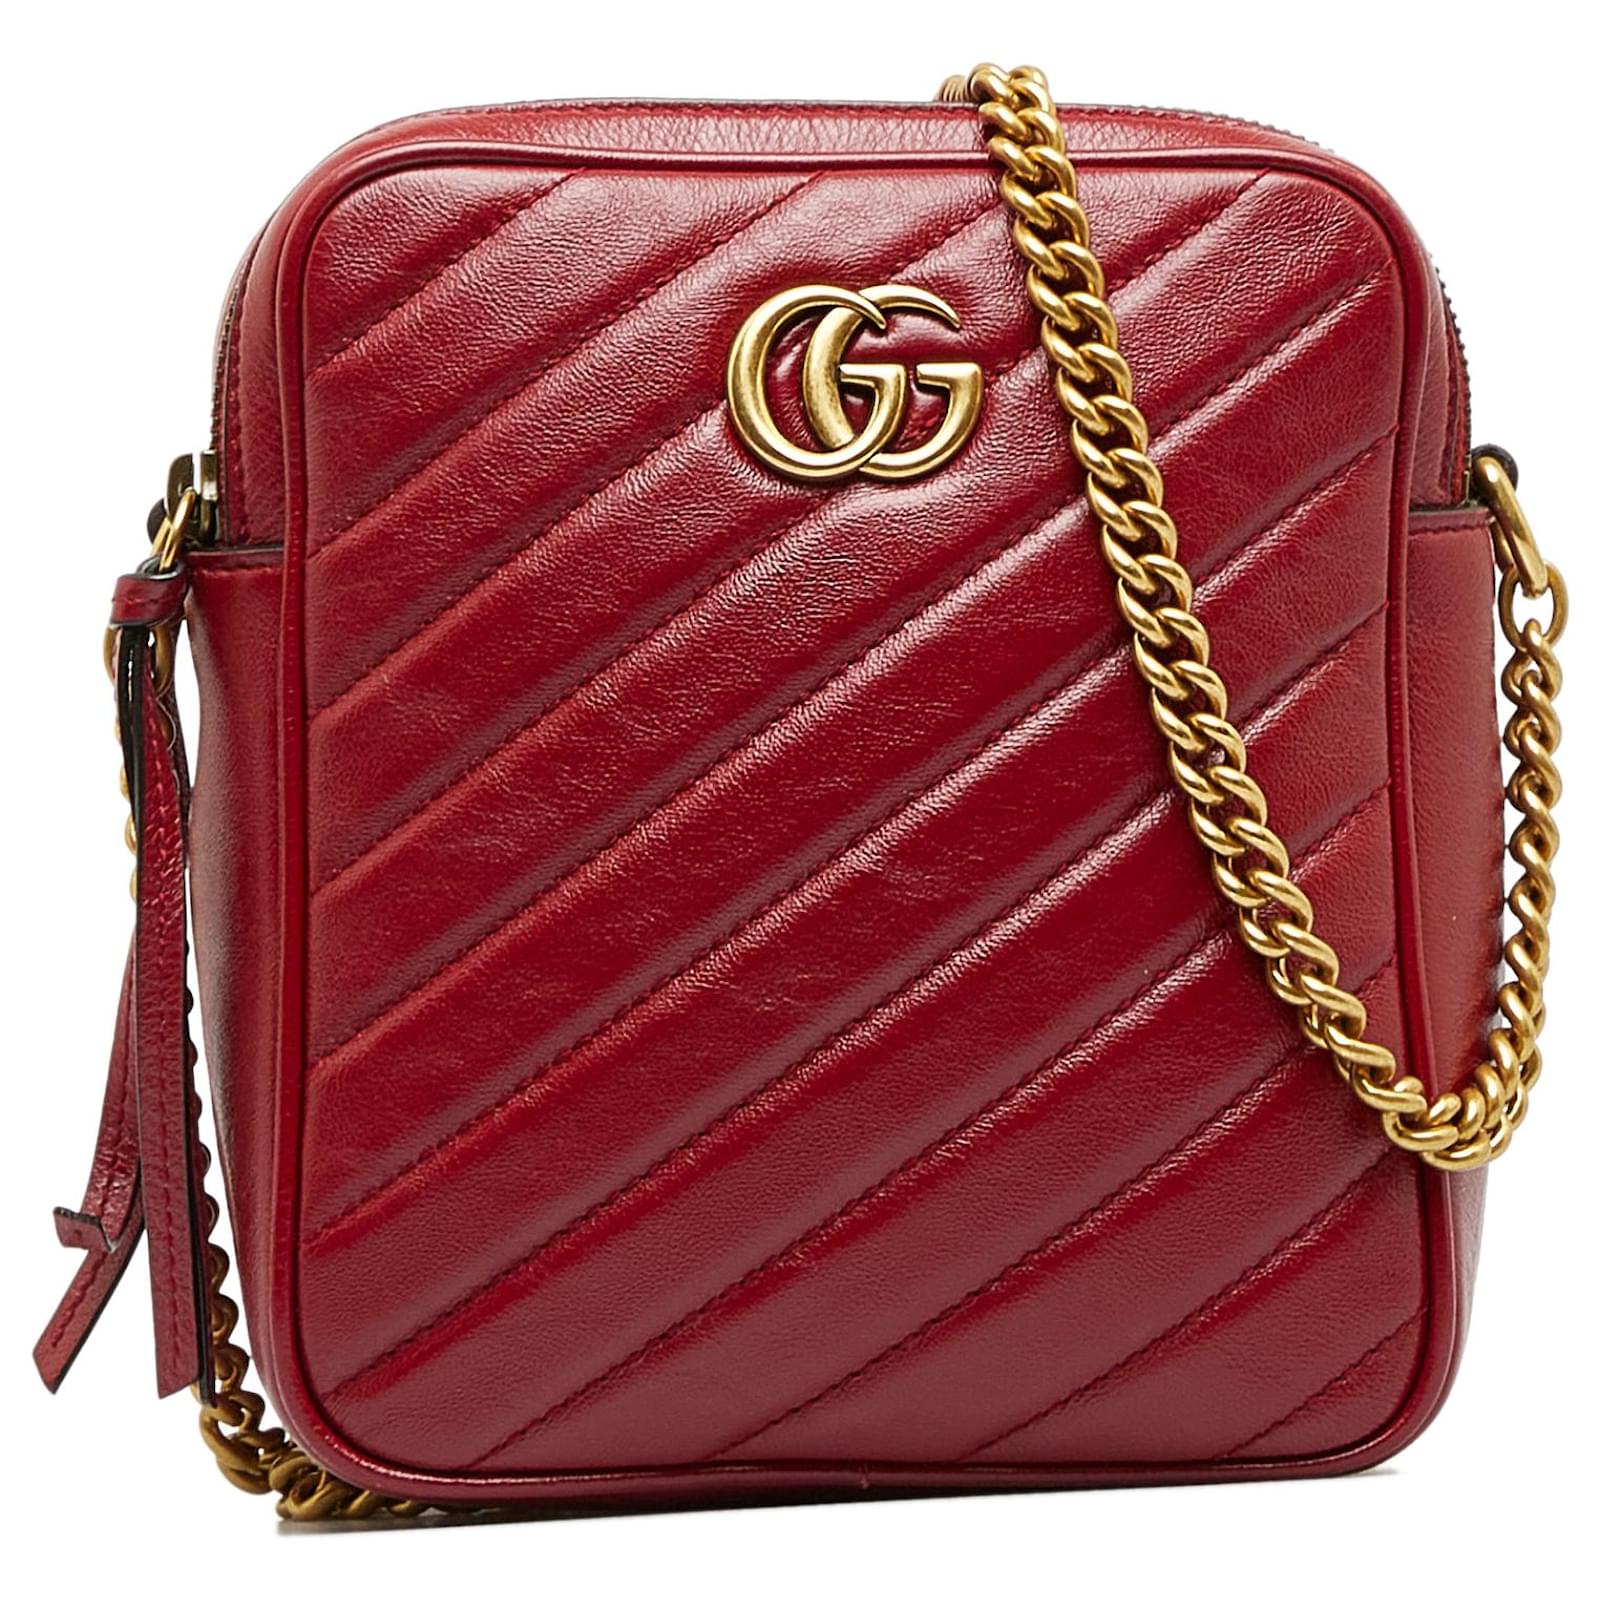 Gg marmont leather camera bag - Gucci - Women | Luisaviaroma